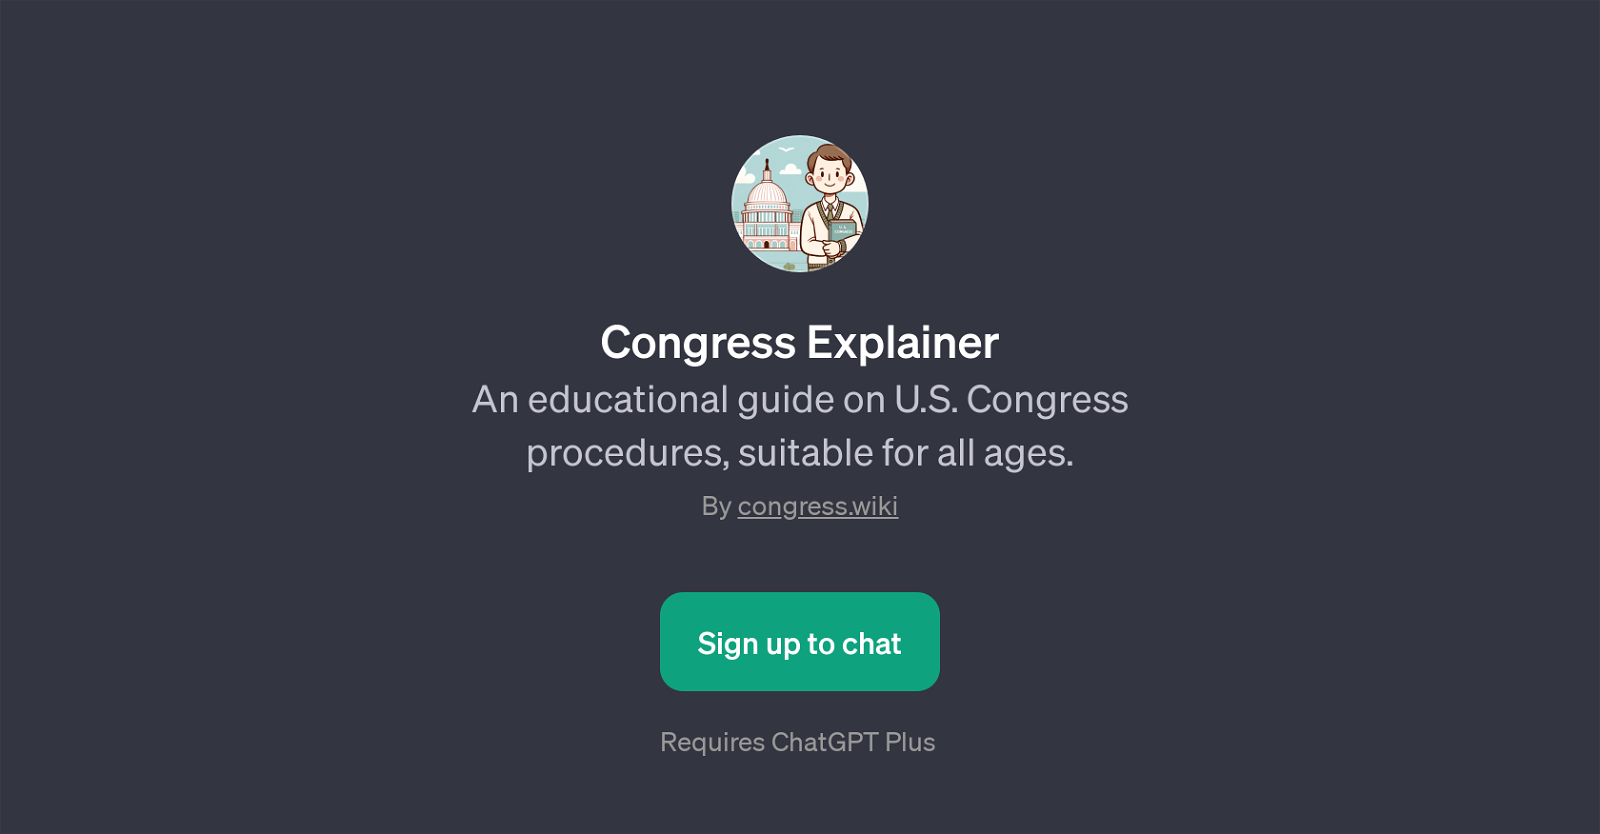 Congress Explainer website